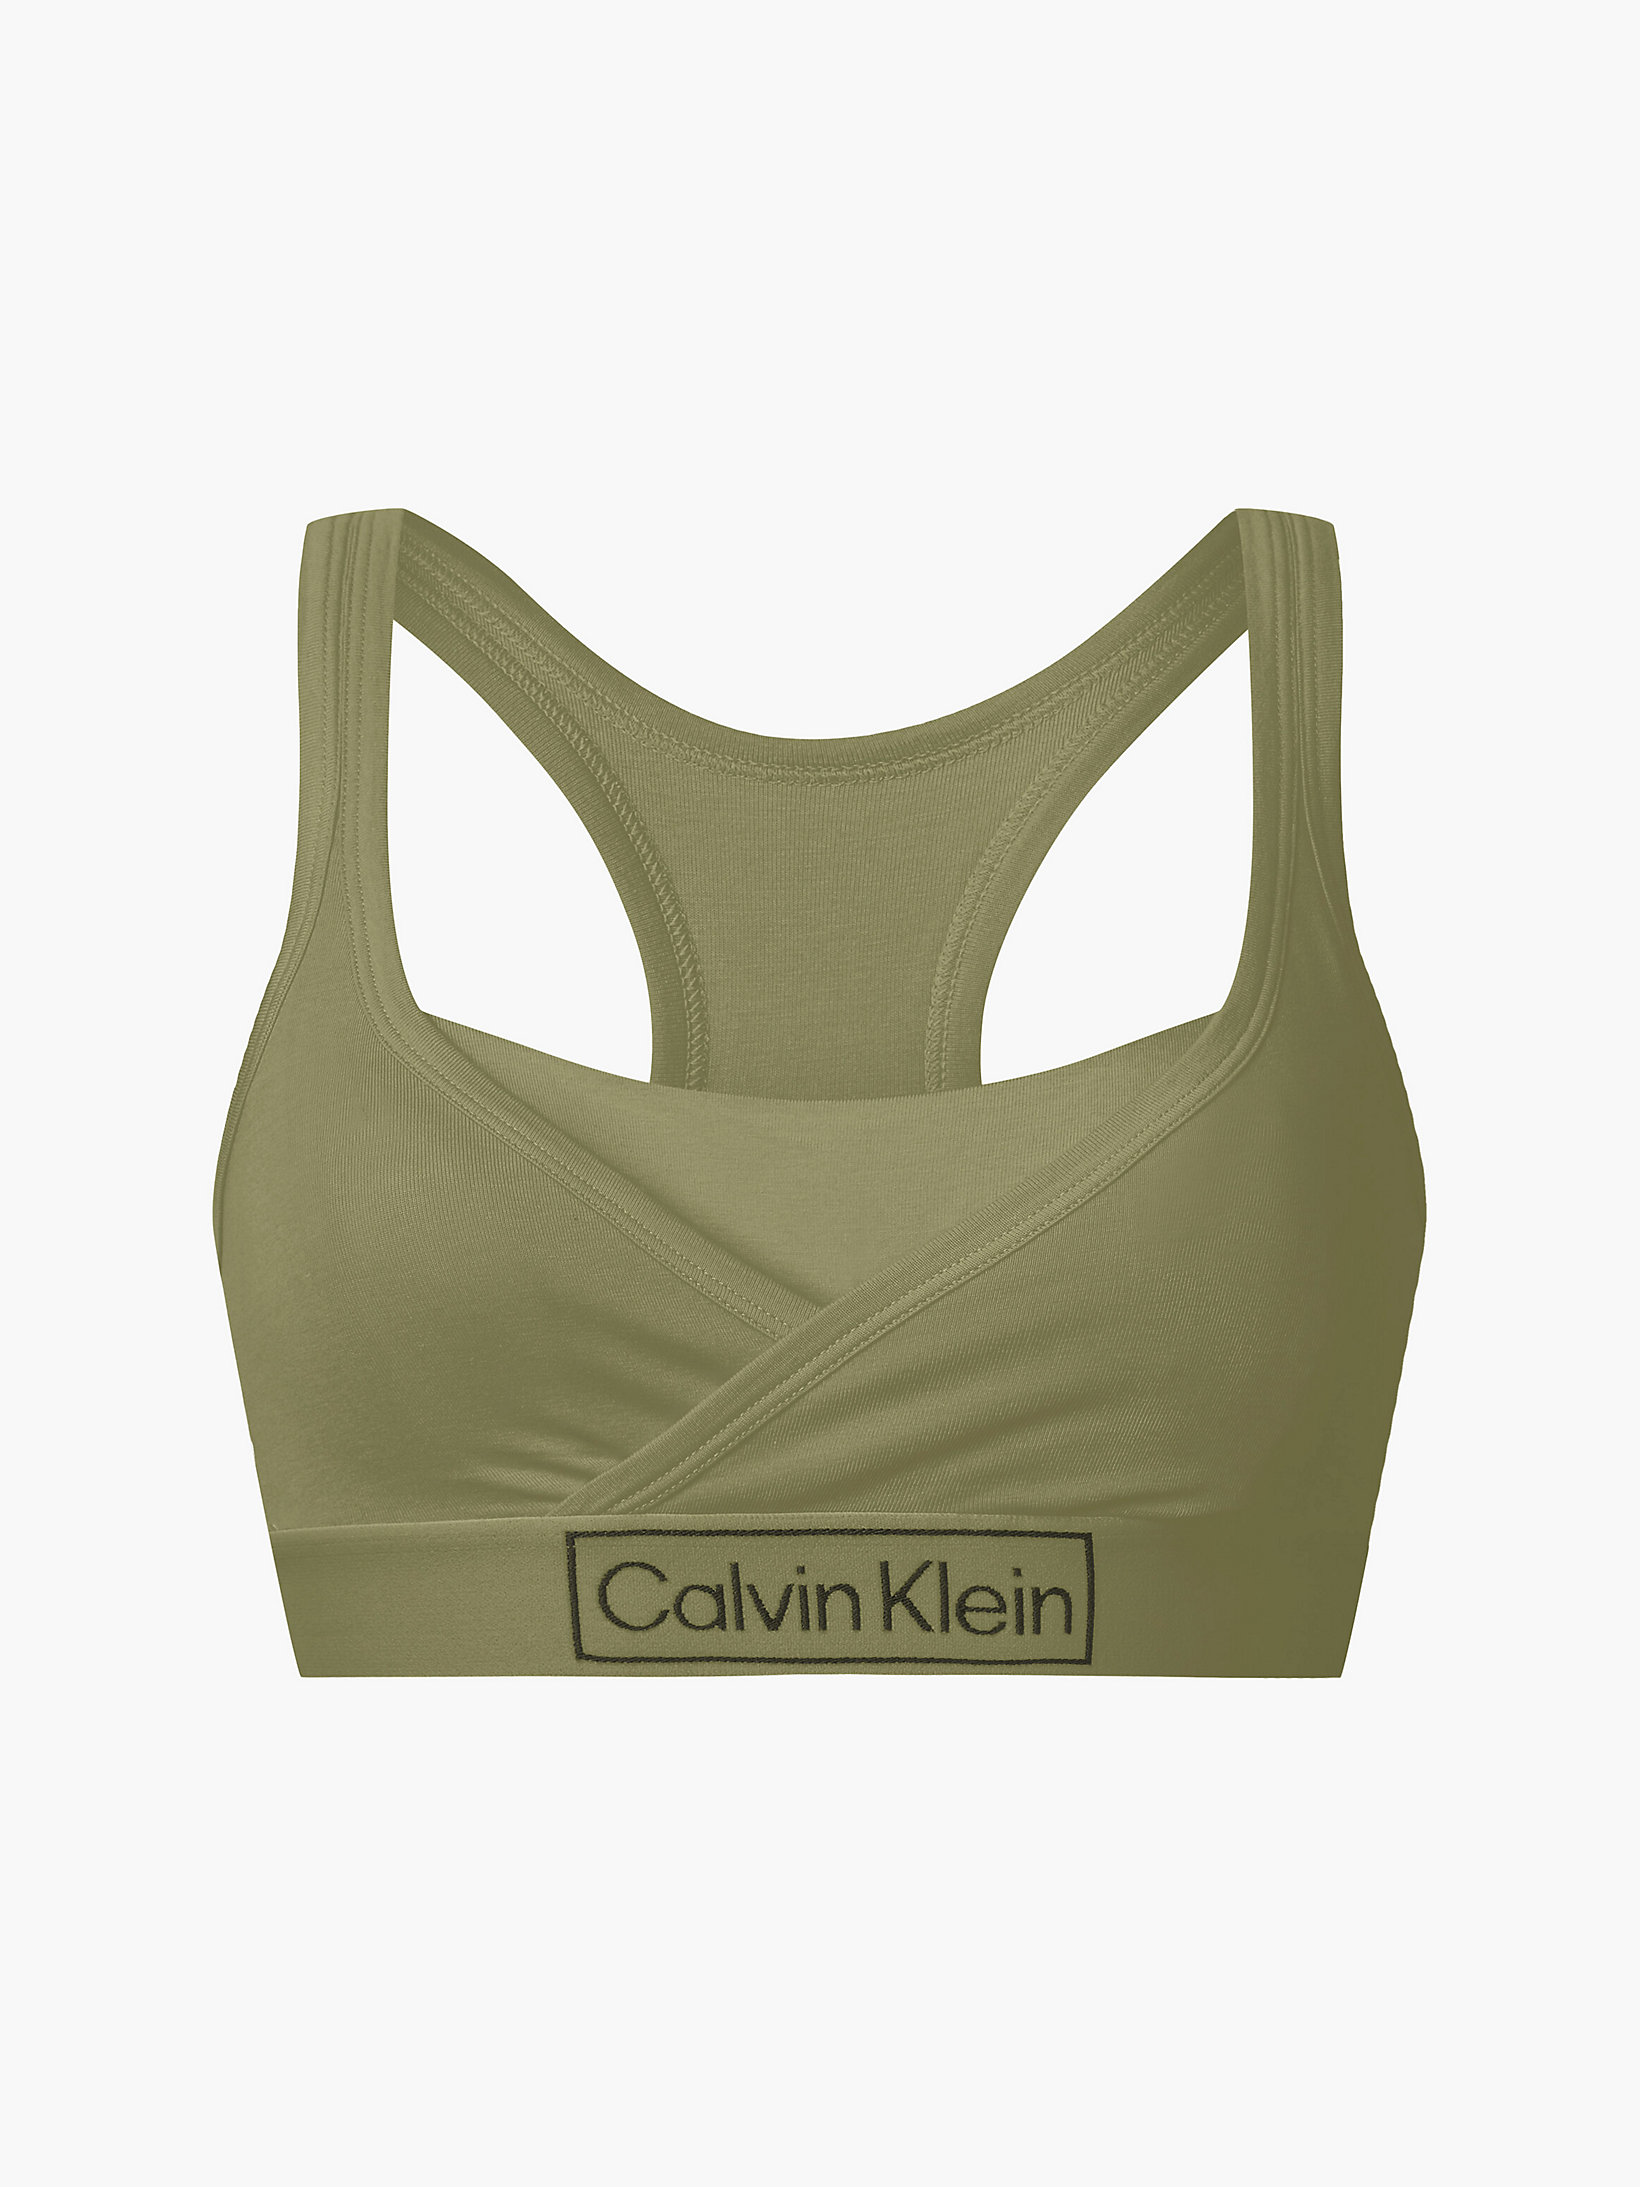 Napa Maternity Bralette - Reimagined Heritage undefined women Calvin Klein